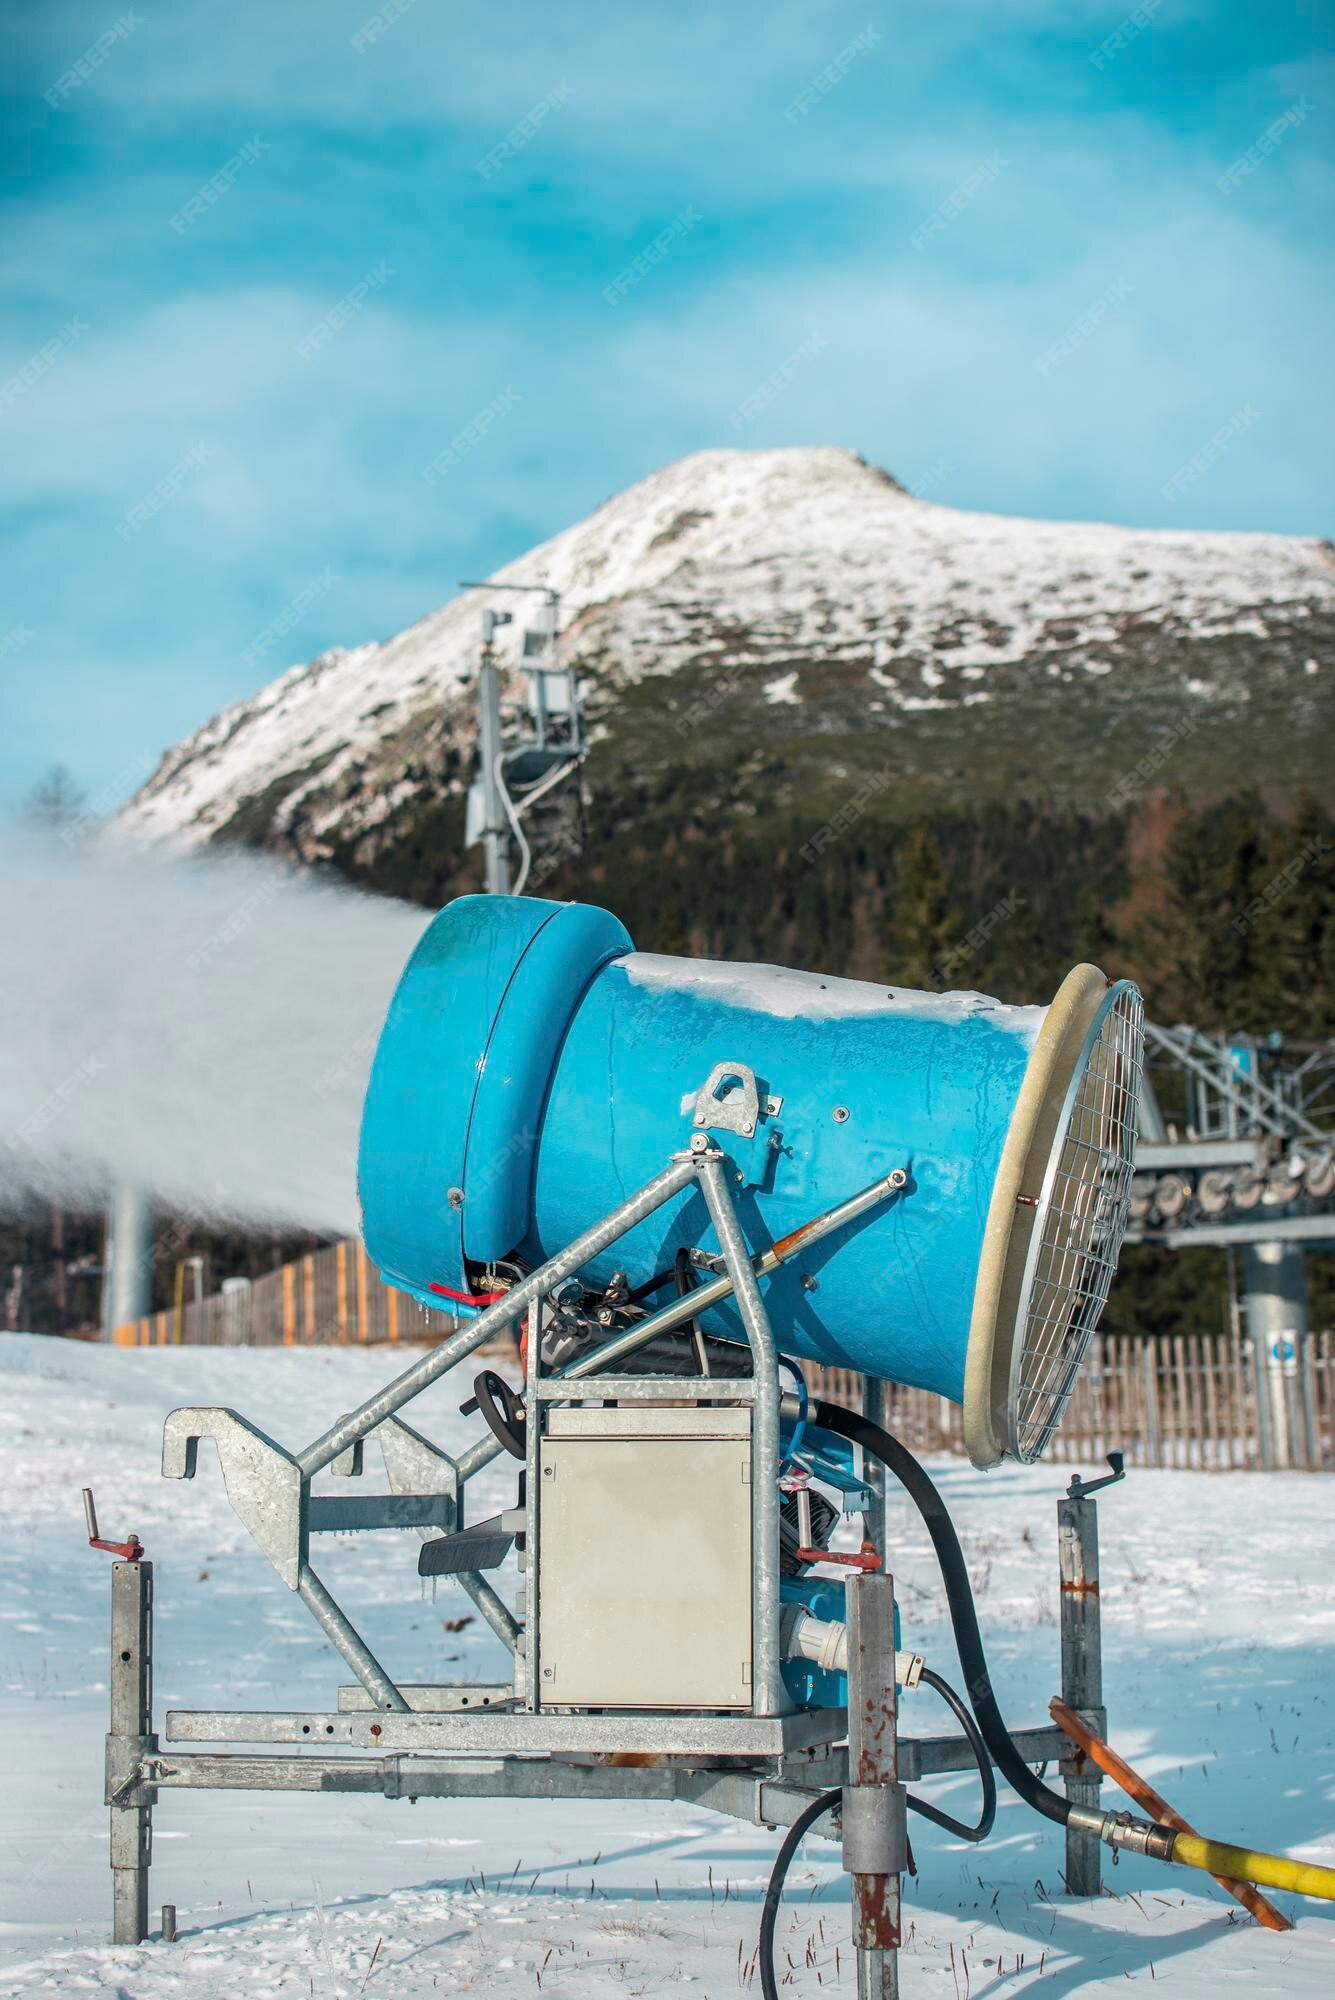 Premium Photo  Snow cannon in winter mountains. snow-gun spraying  artificial ice crystals. machine making snow.